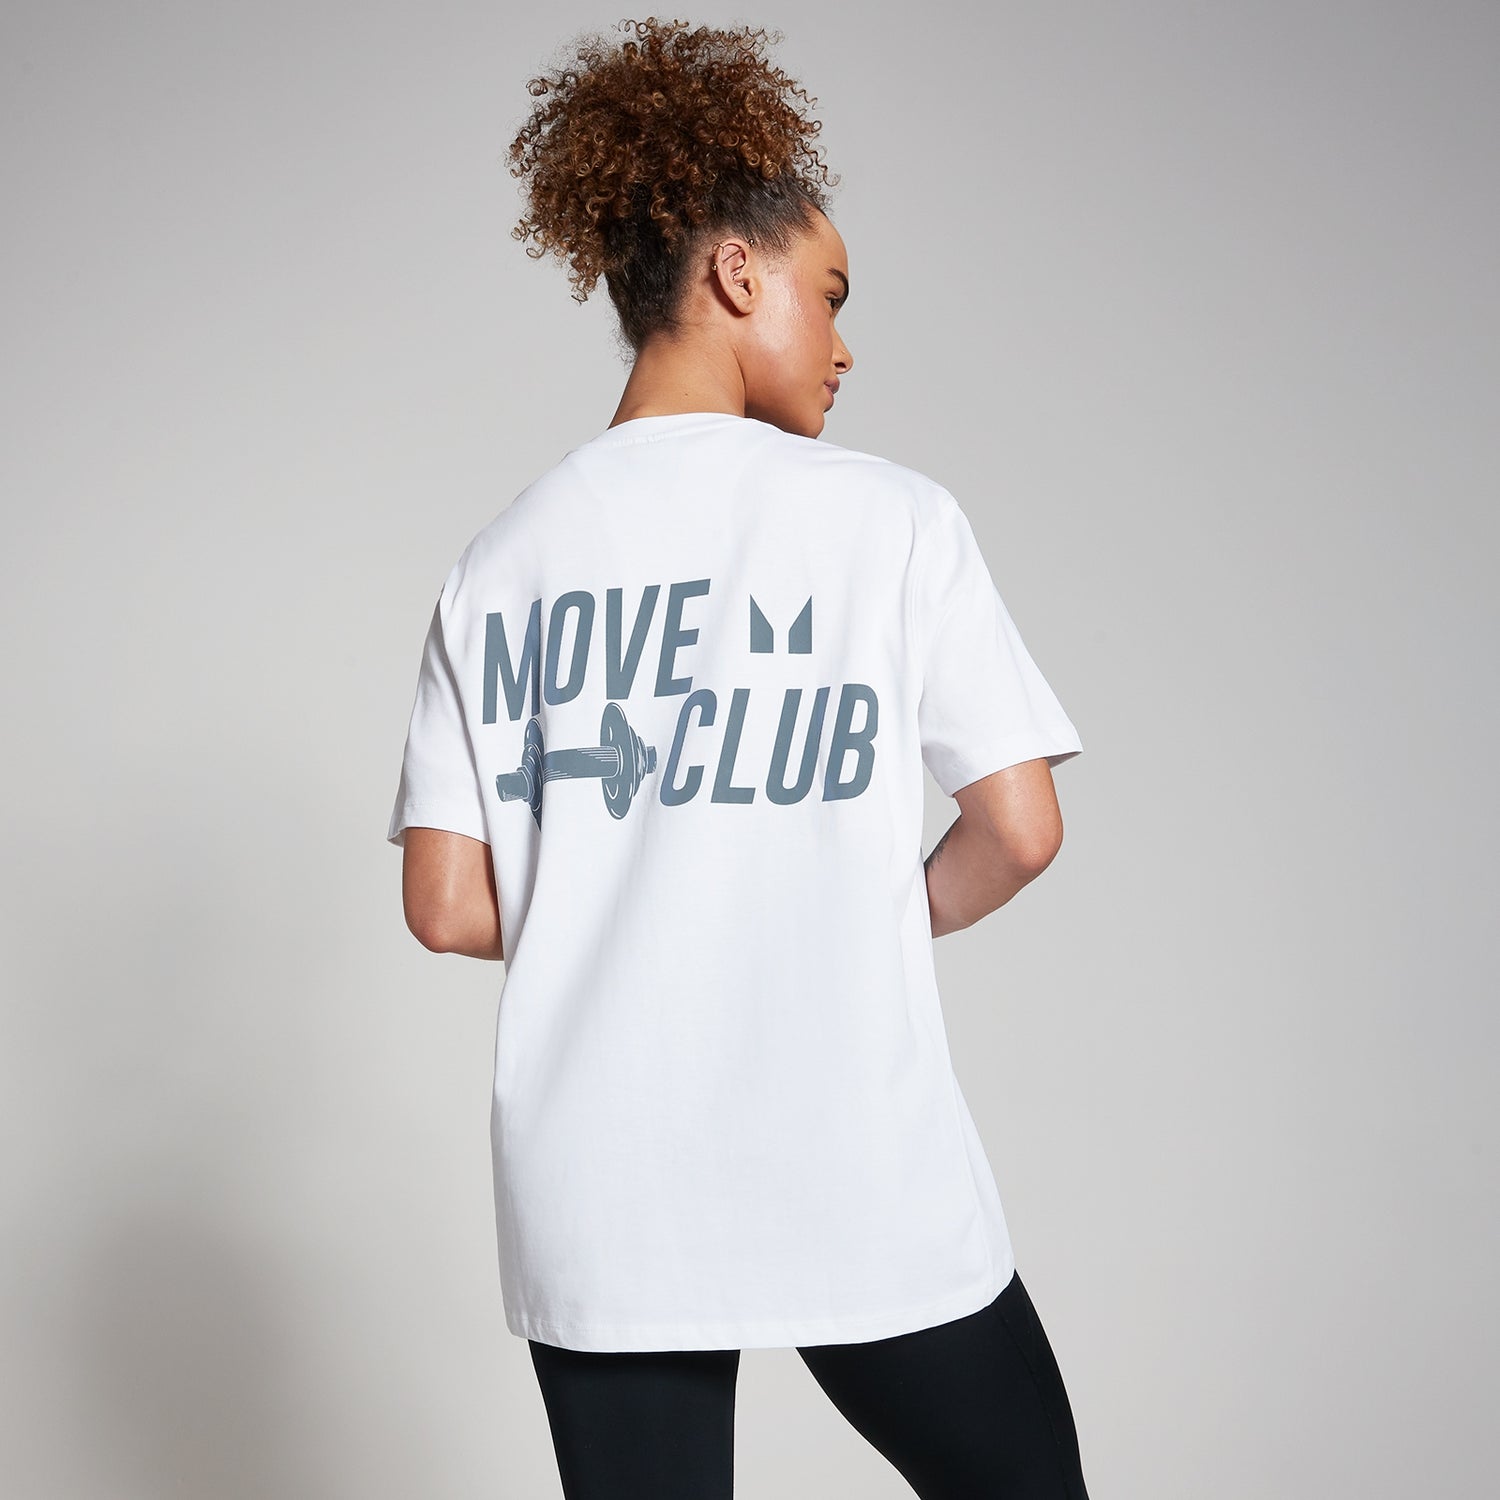 Camiseta extragrande Move Club de MP - Blanco - S-M